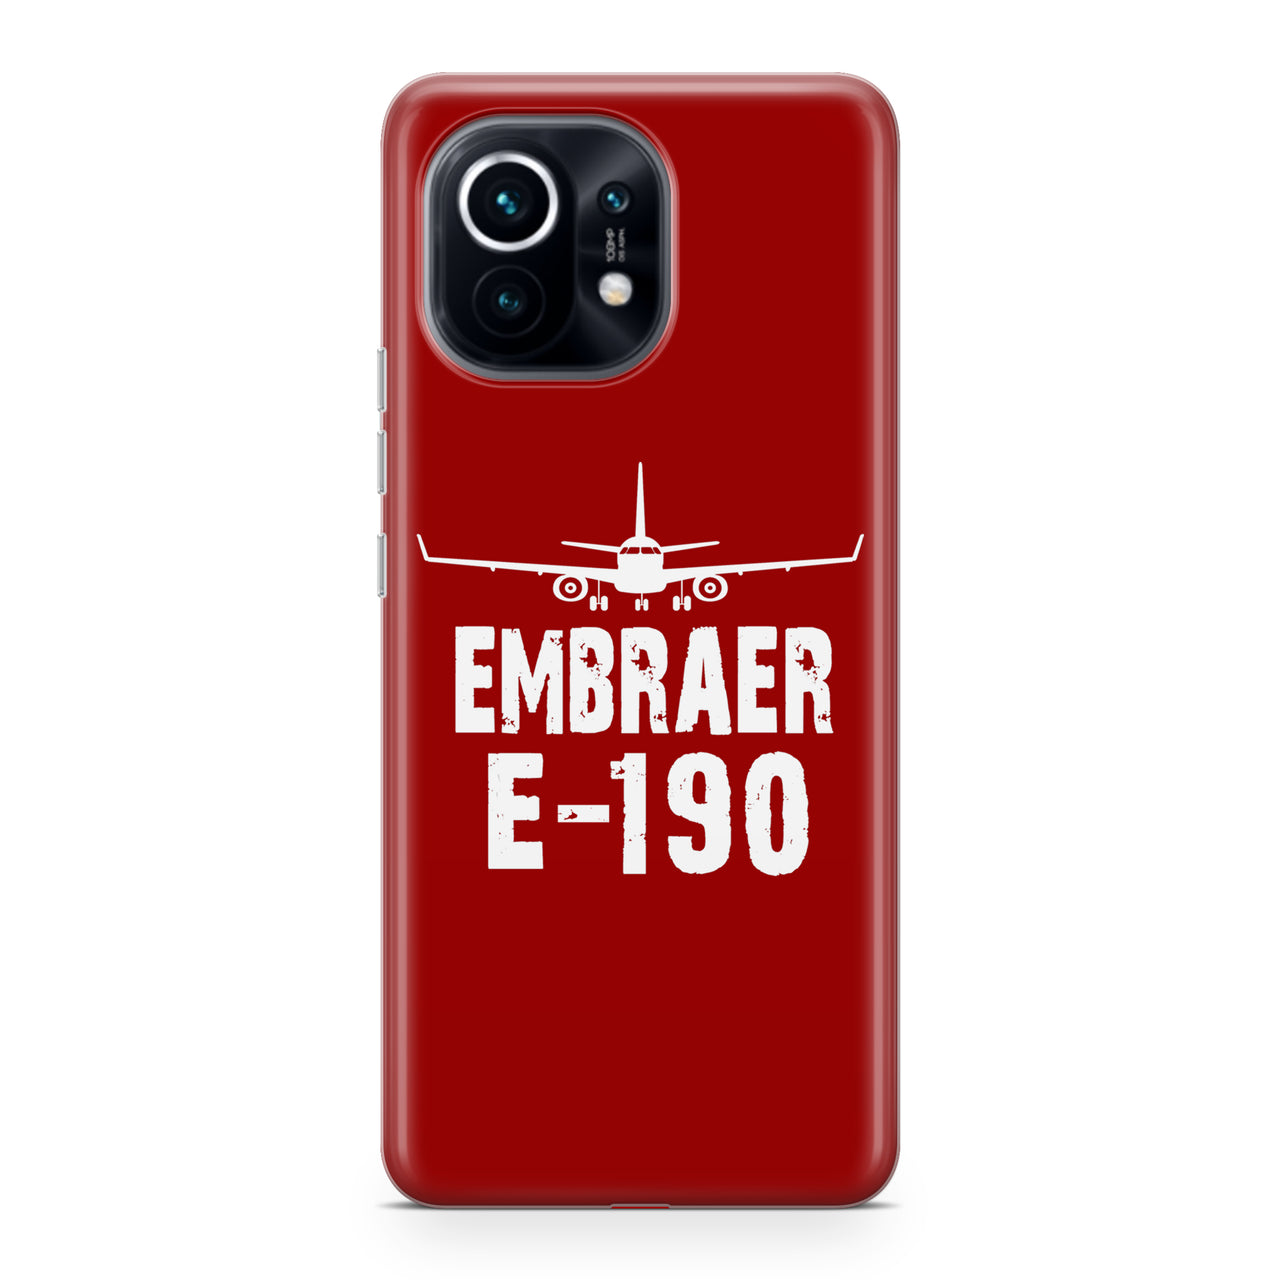 Embraer E-190 & Plane Designed Xiaomi Cases